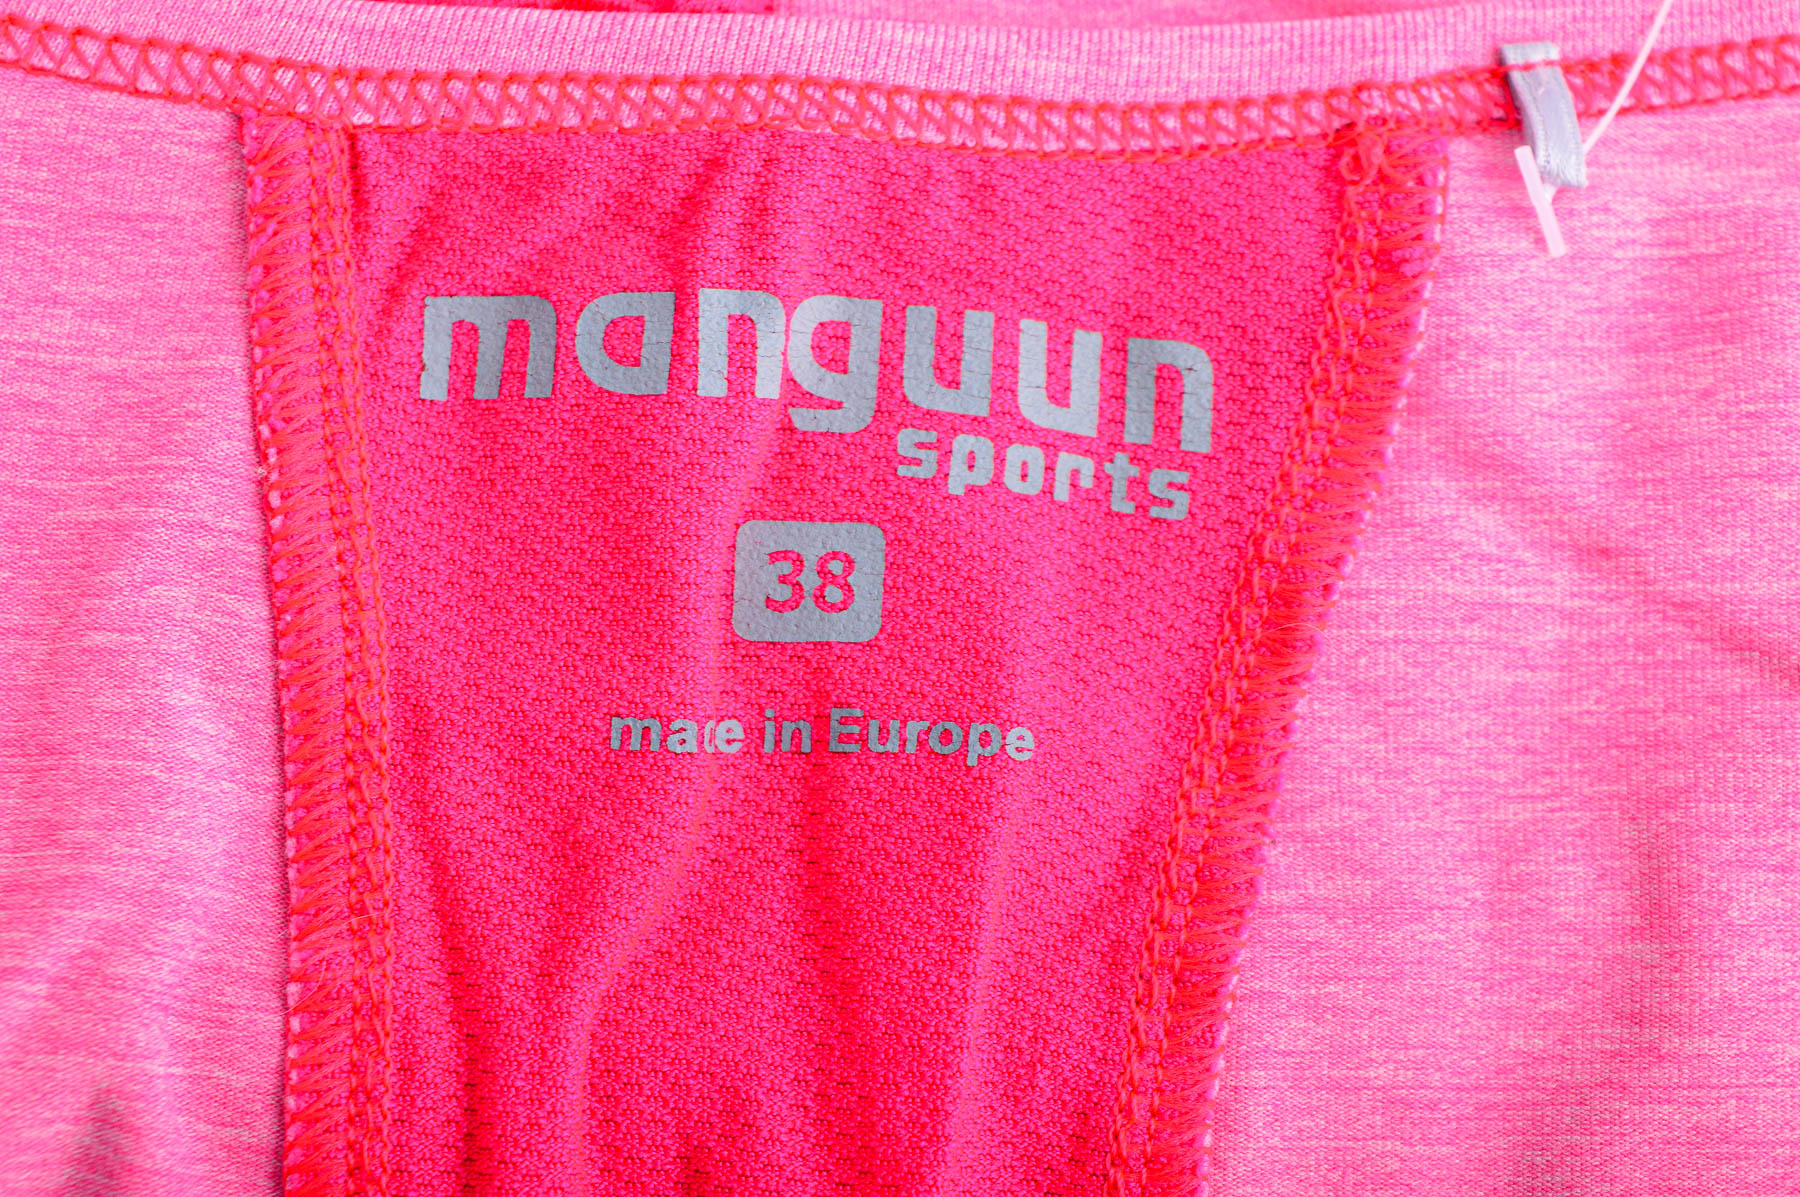 Women's blouse - Manguun sports - 2